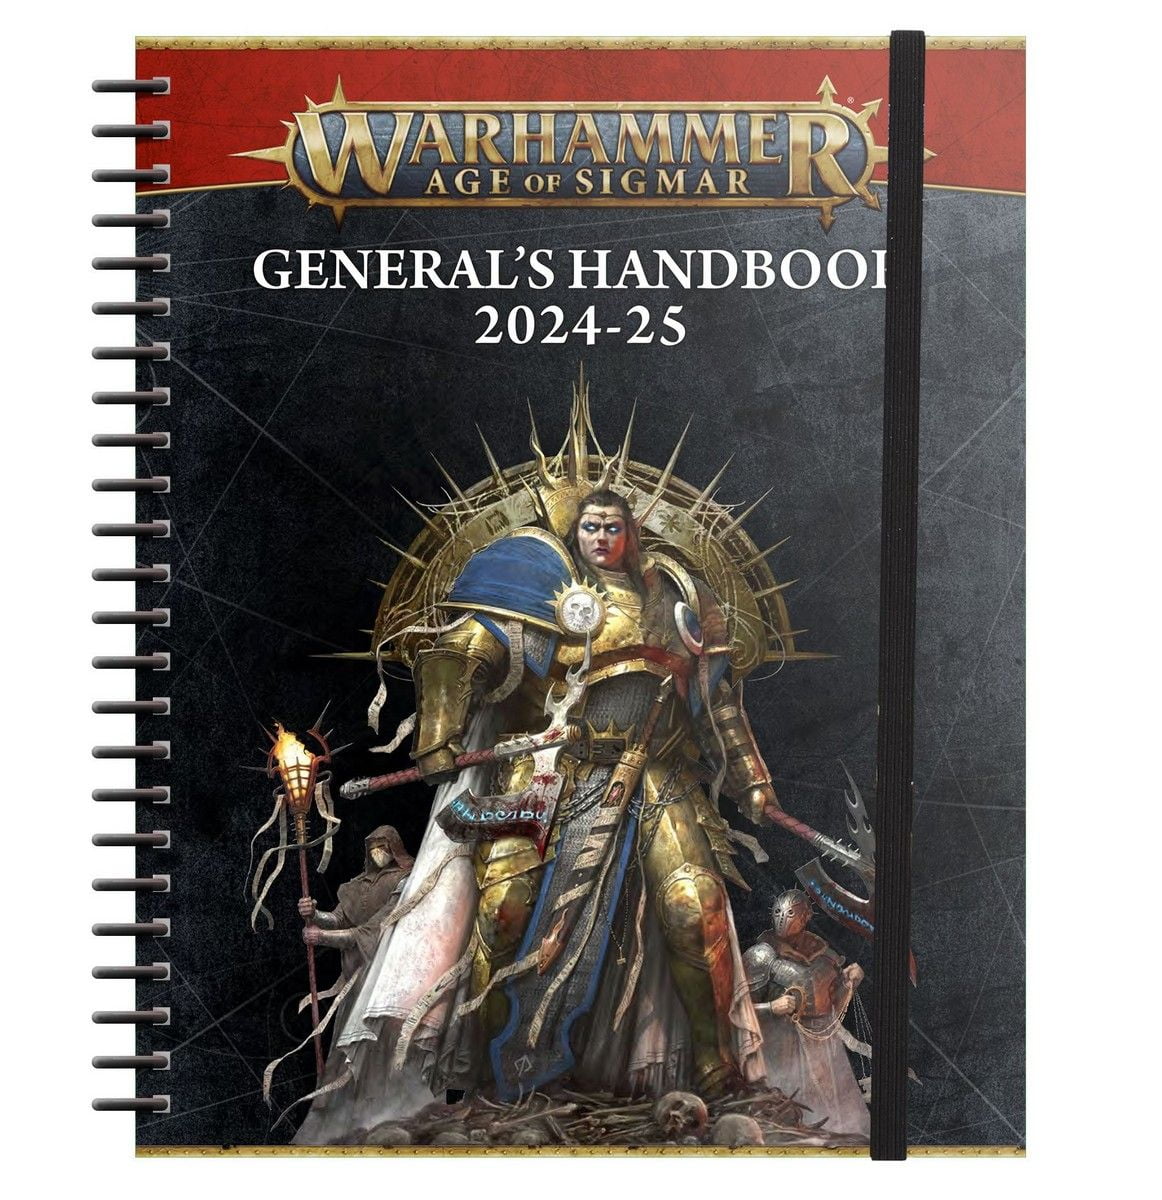 Warhammer Age of Sigmar: General’s Handbook 2024-25 - English